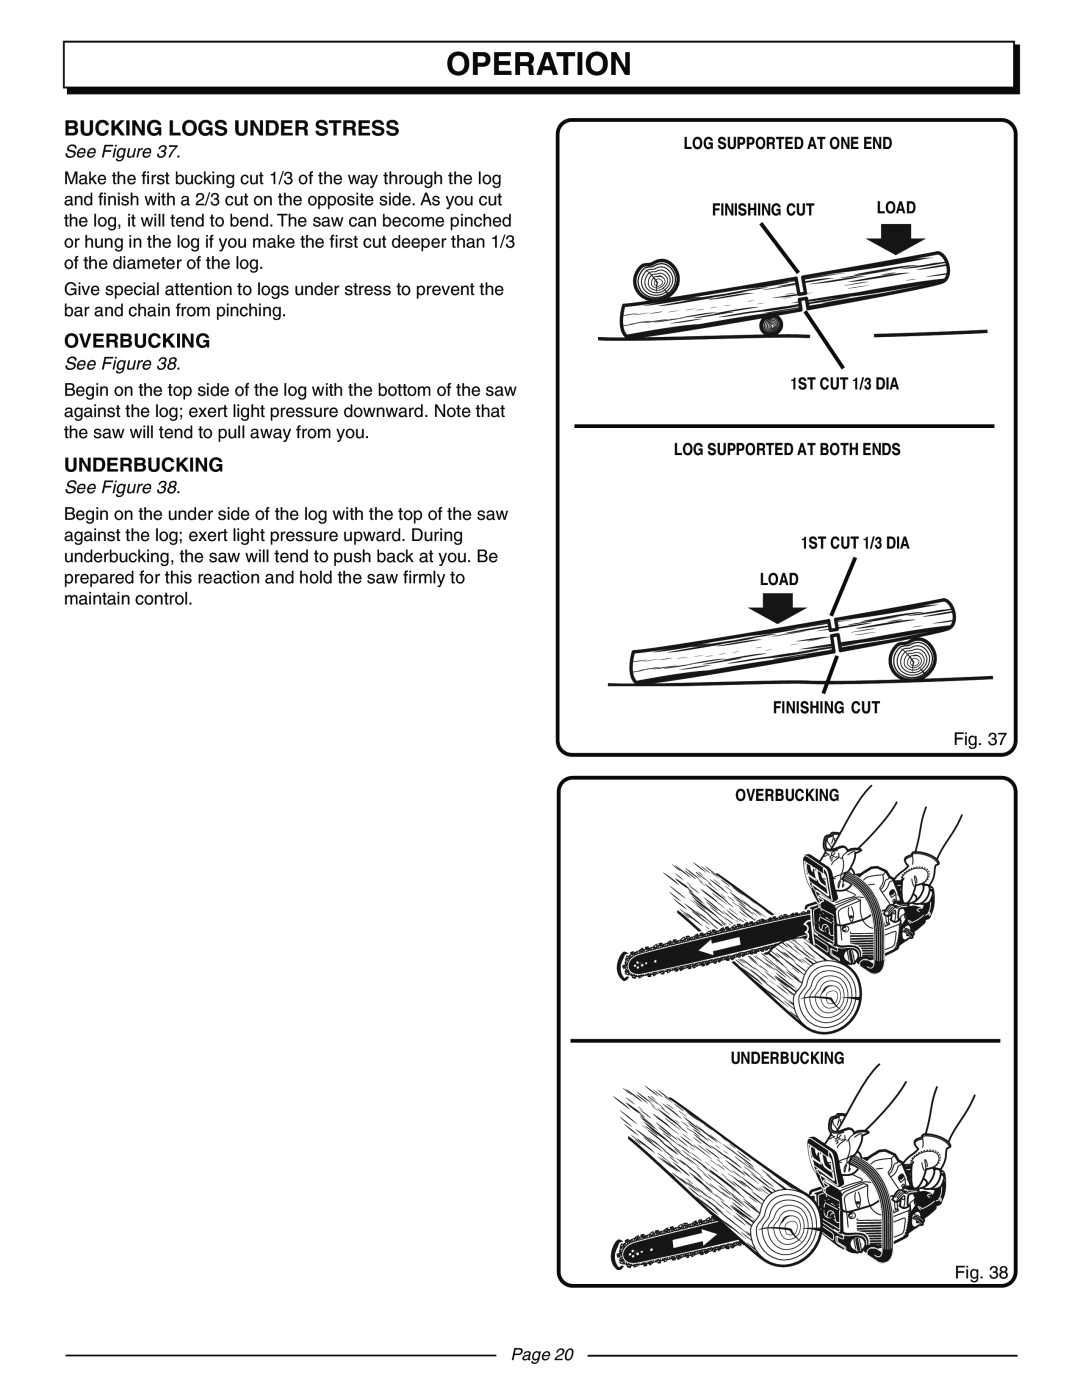 Homelite UT10942D manual Bucking Logs Under Stress, Operation, Overbucking, Underbucking, See Figure, Page 